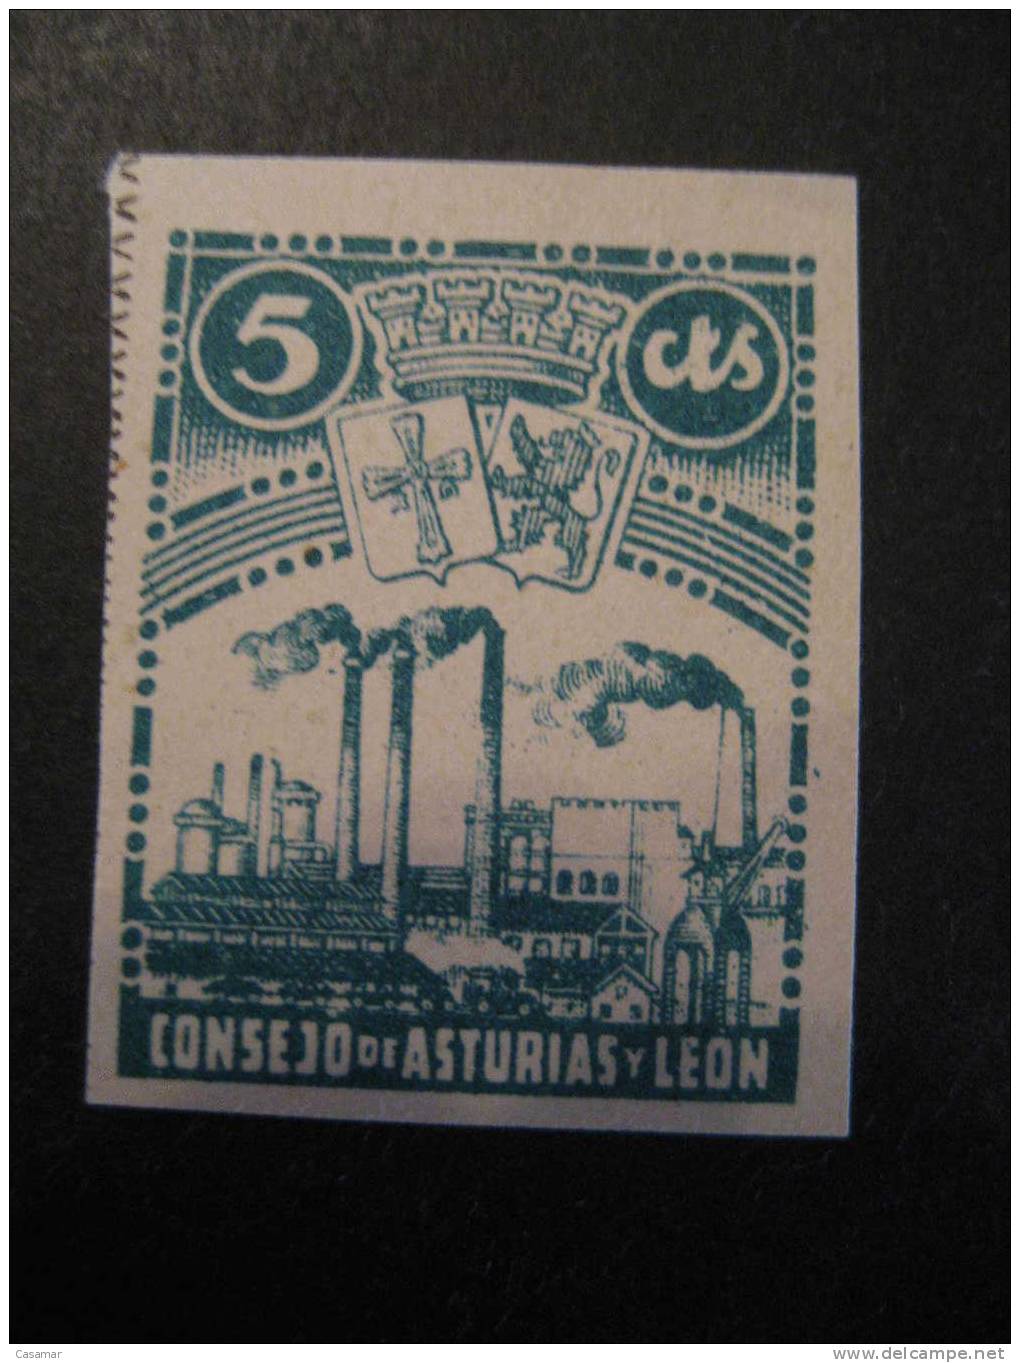 ASTURIAS Y LEON Consejo 5 Cts Escudo Arm Industria Industry Imperforated Poster Stamp Label Vignette Vi&ntilde;eta - Asturien & Léon